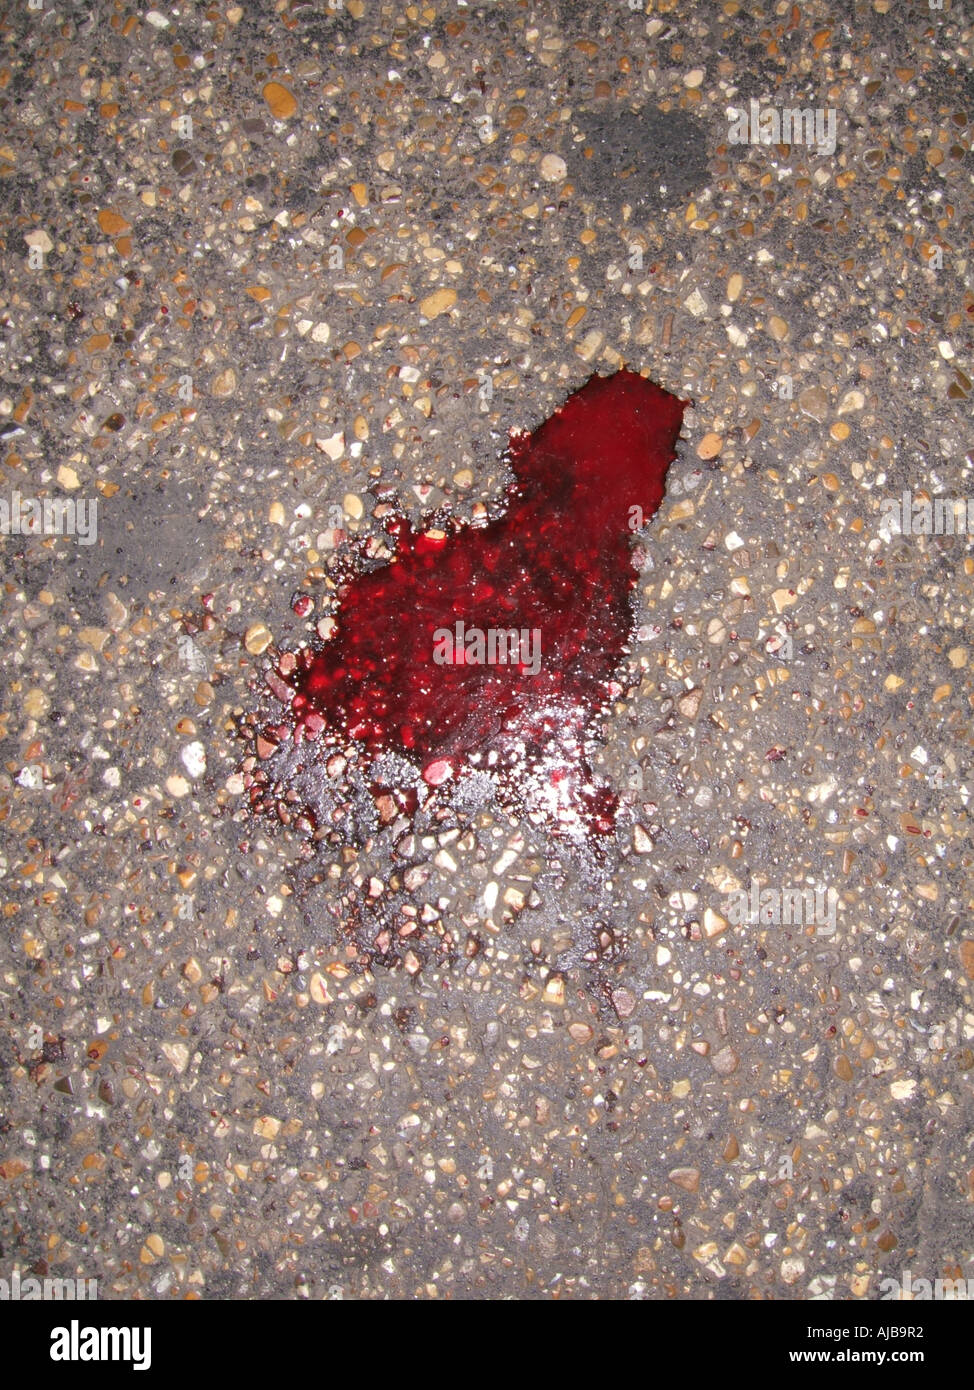 blood stain on floor Stock Photo - Alamy